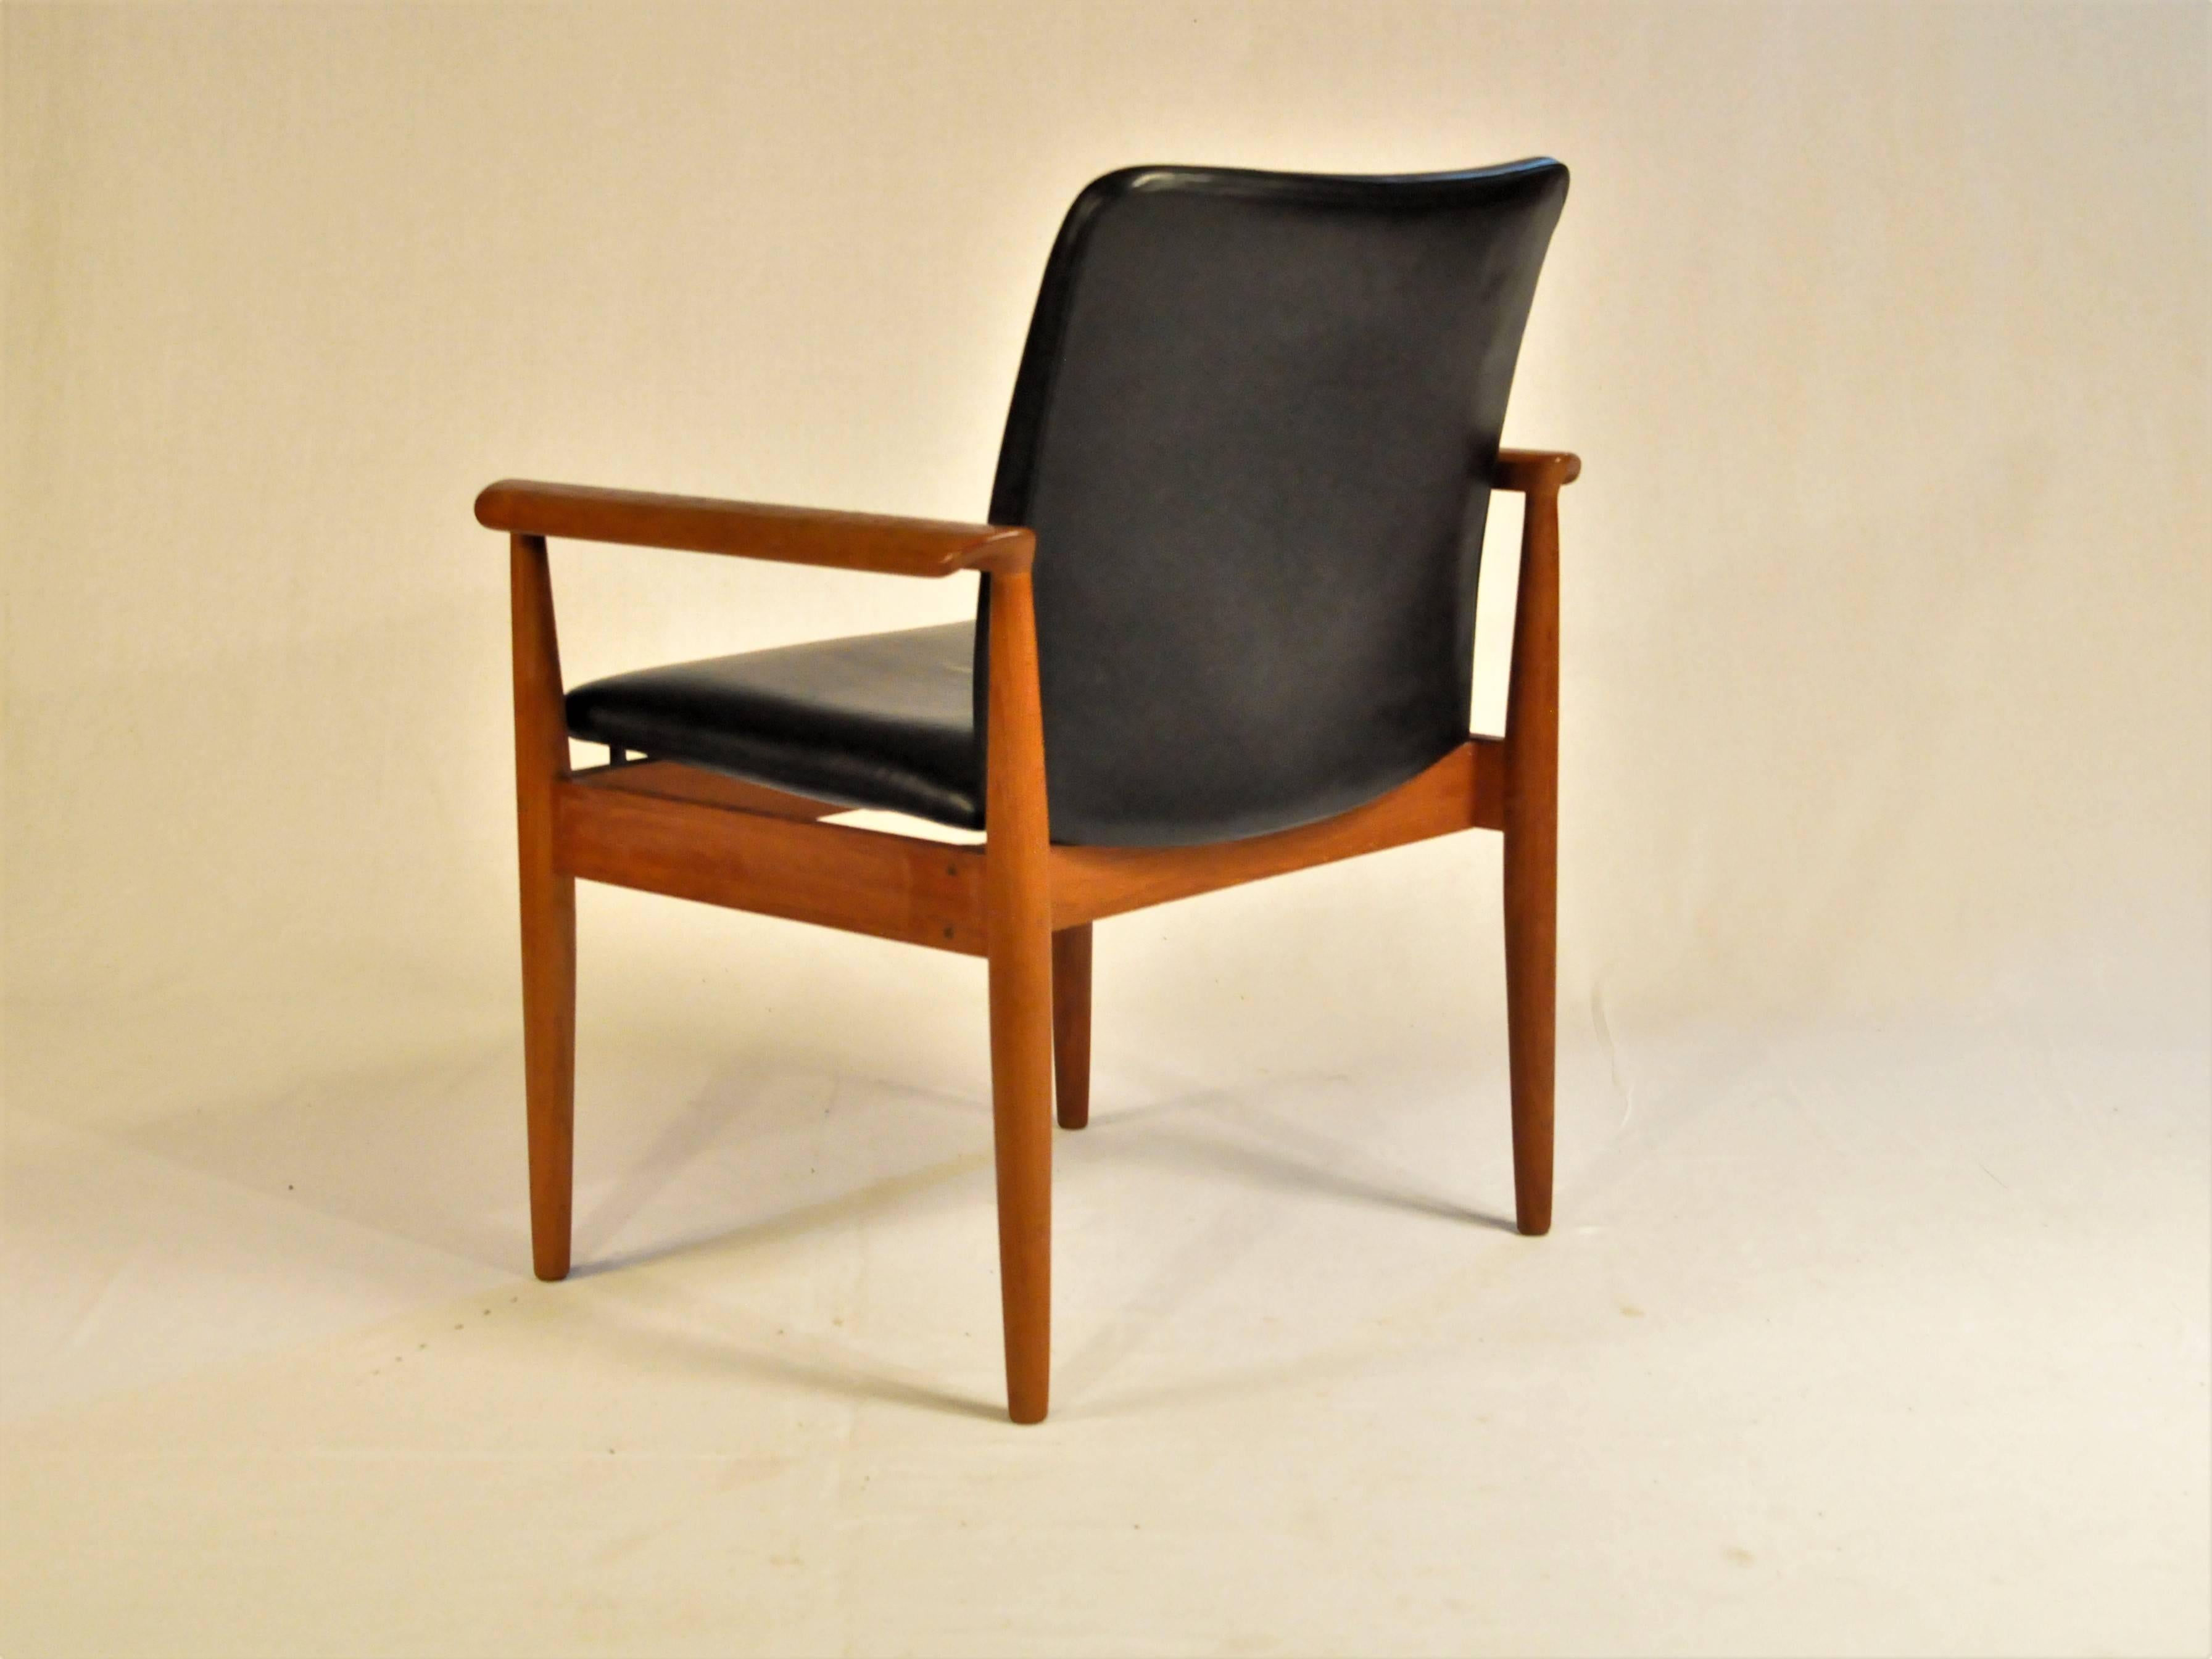 Scandinavian Modern 1960s Finn Juhl Set of Six Model 209 Diplomat Chair in Teak and Leather by Cado